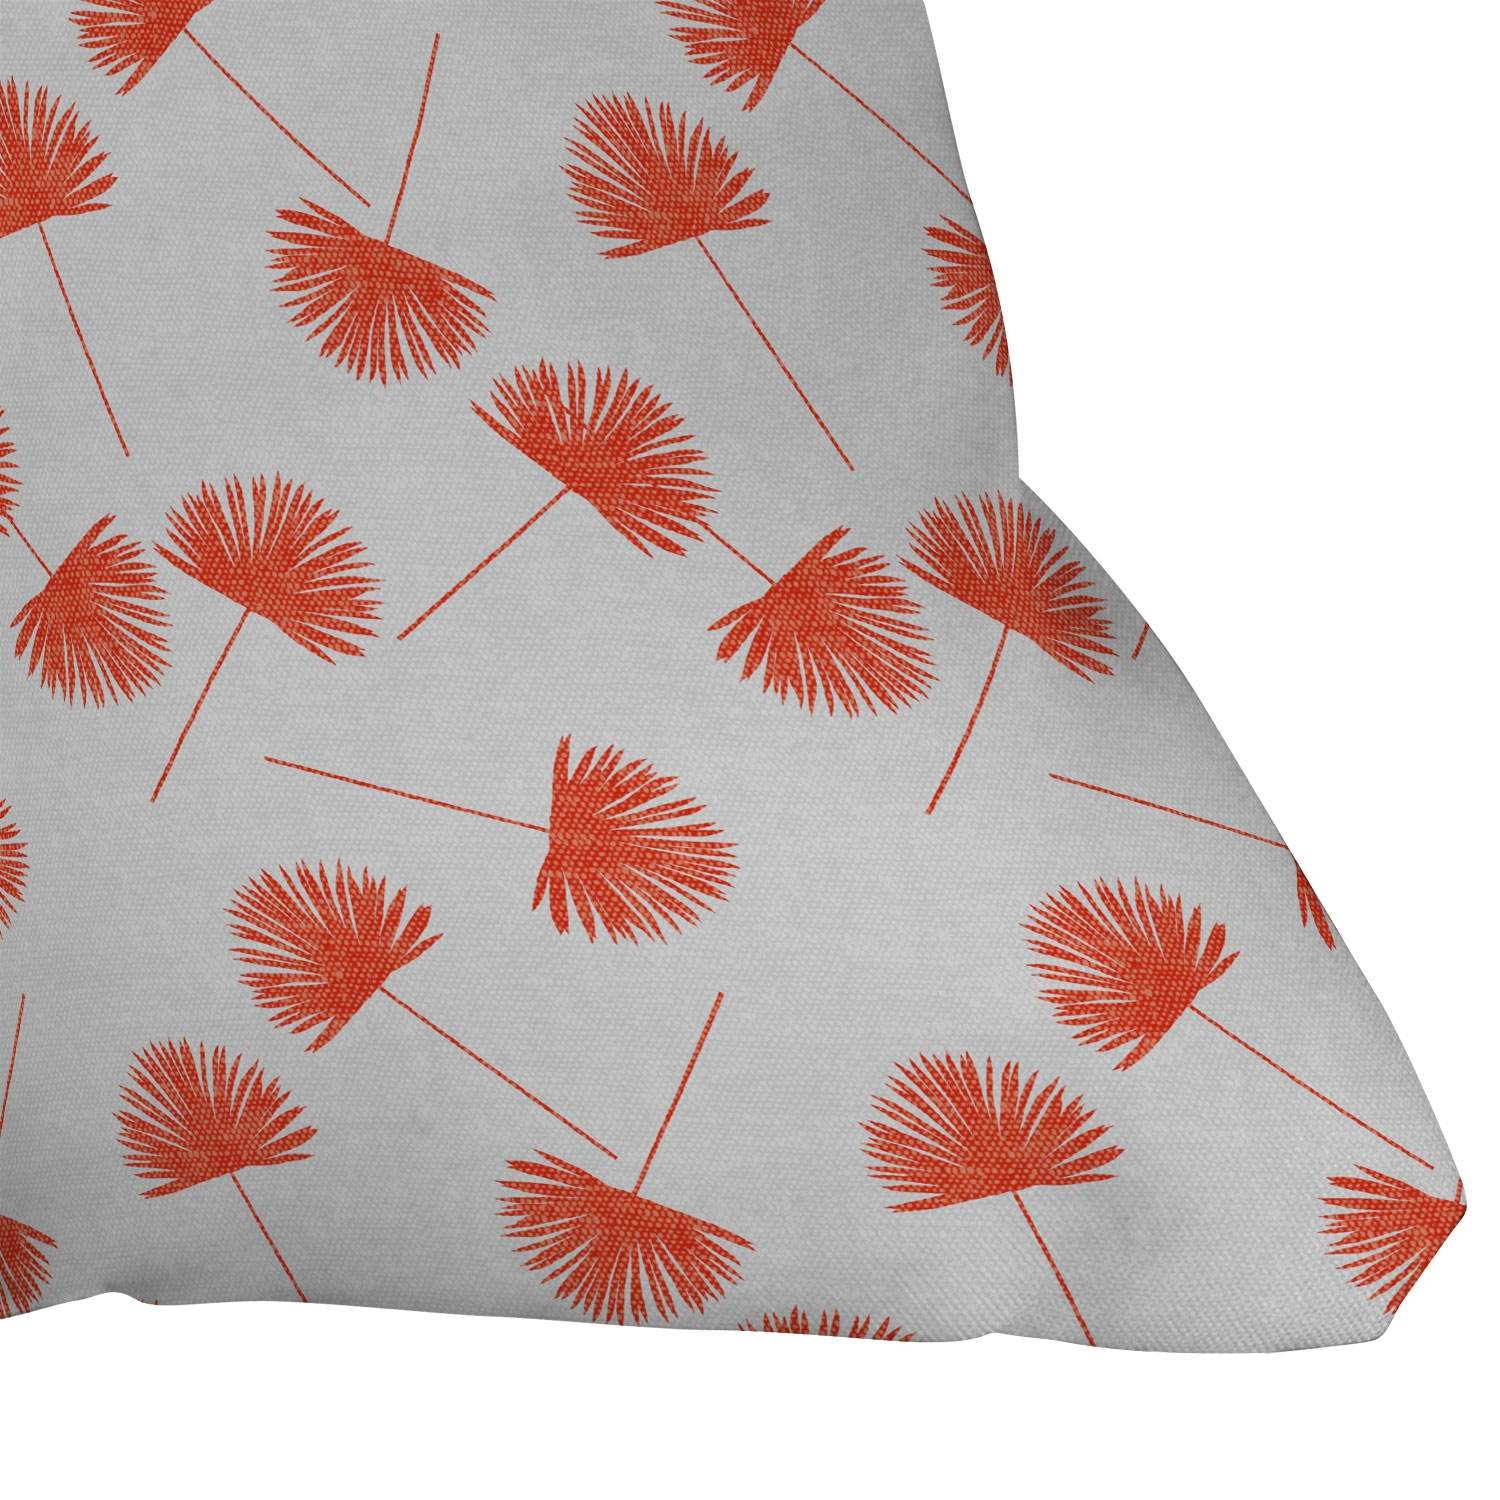 Woven Fan Palm In Orange by Little Arrow Design Co - Outdoor Throw Pillow 20" x 20" - Image 0